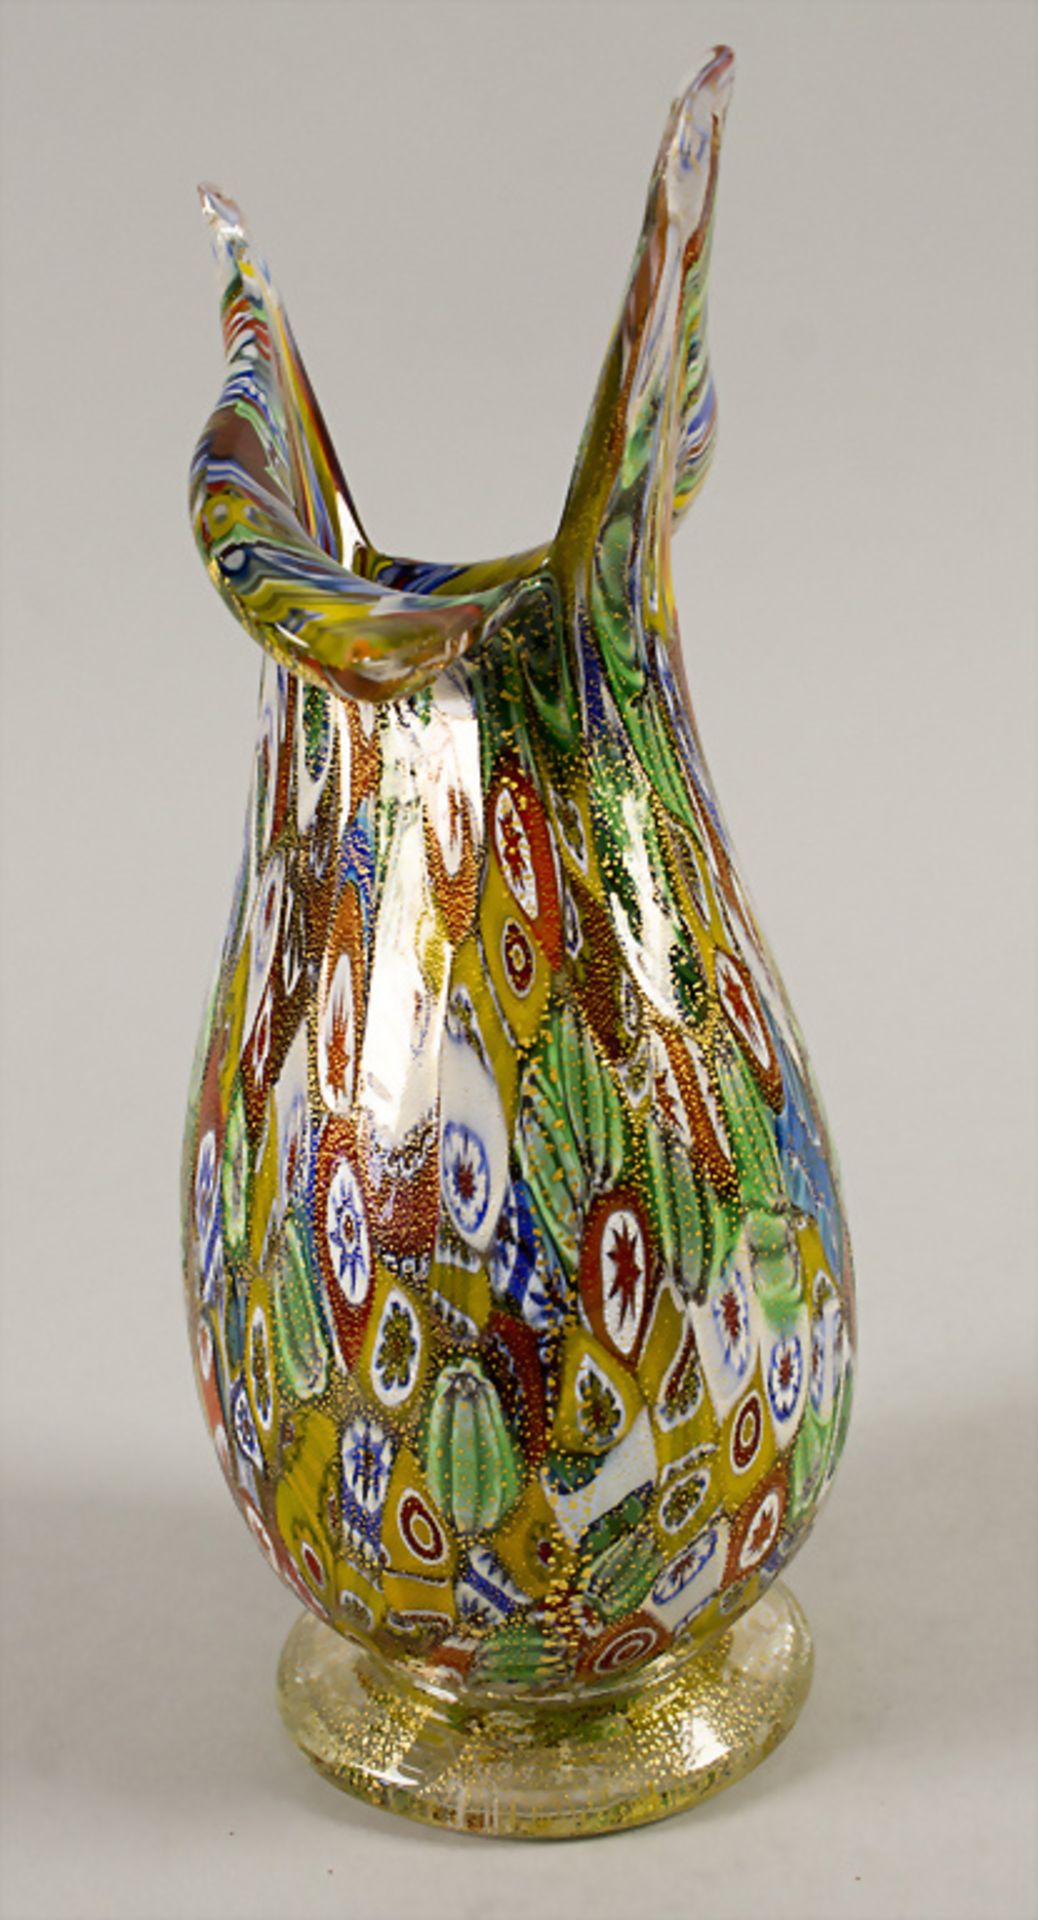 Glasziervase / A decorative glass vase, wohl Aureliano & Toso, Murano, 50er Jahre